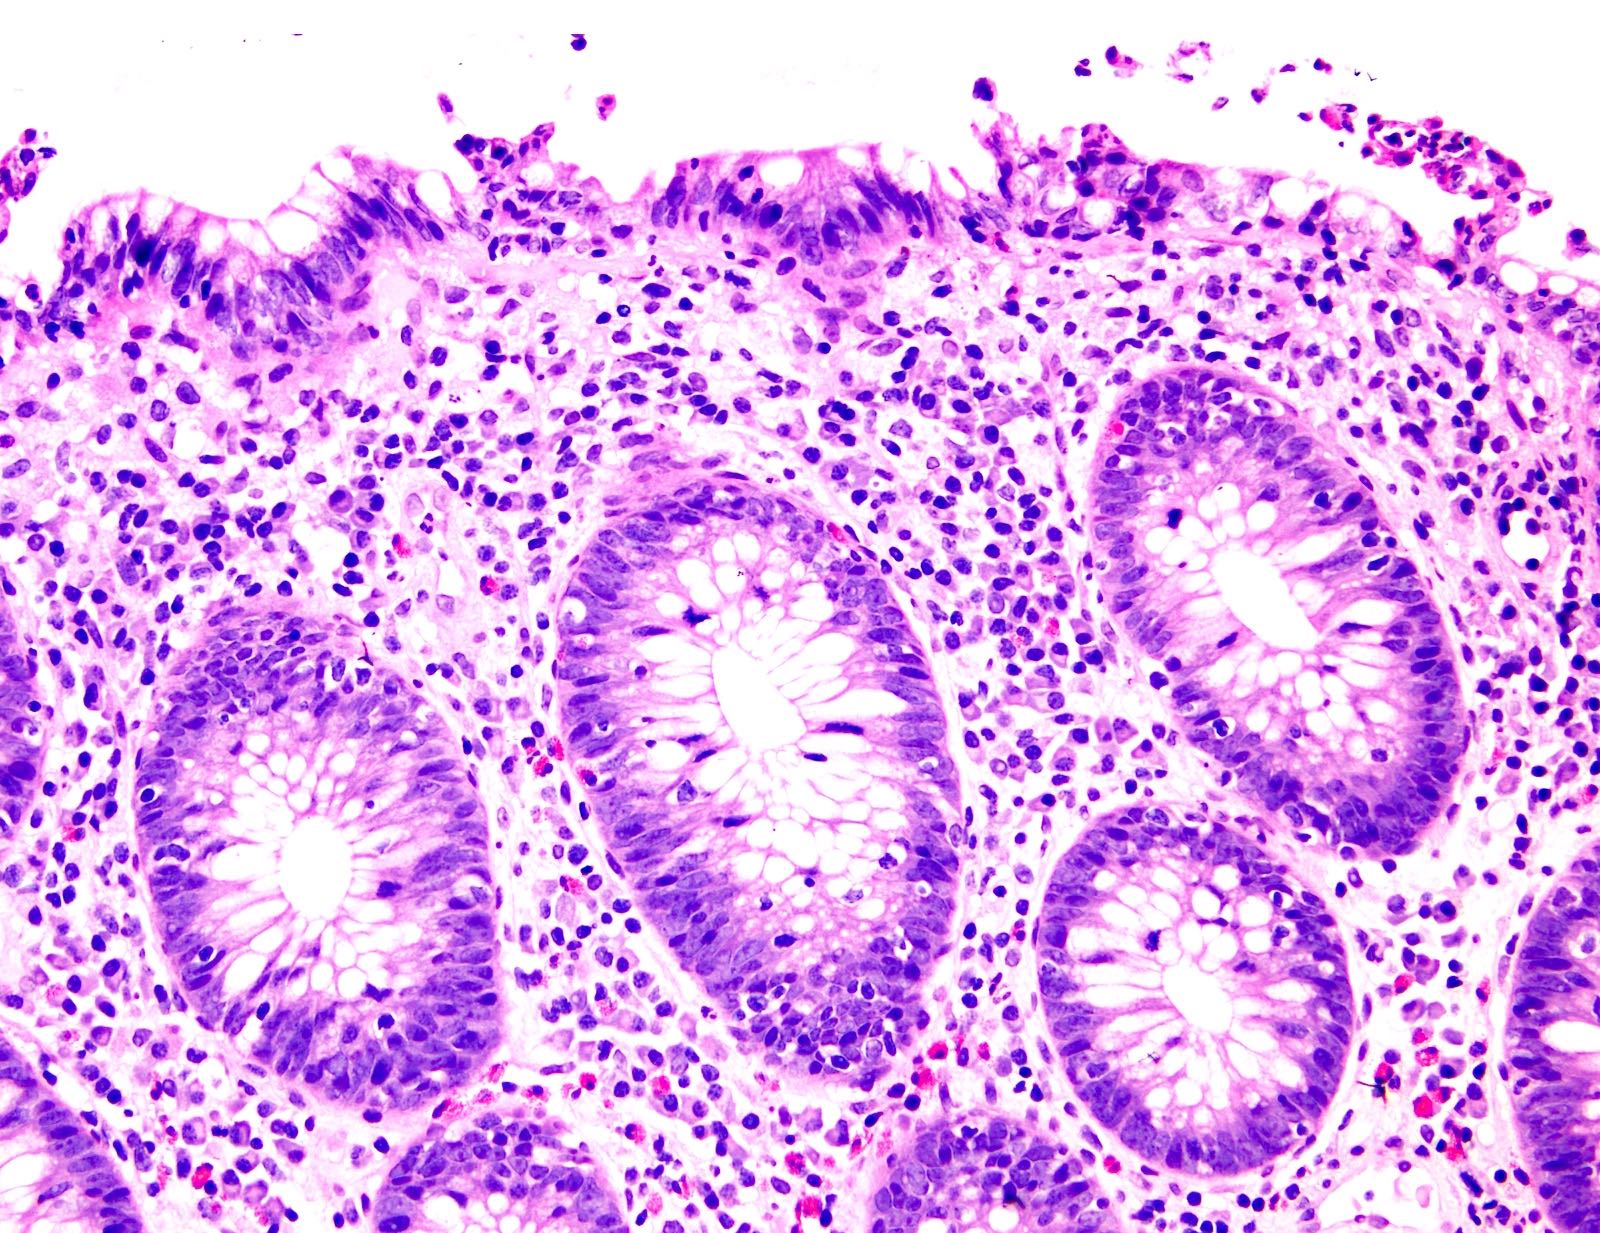 Lymphocytic colitis-like pattern